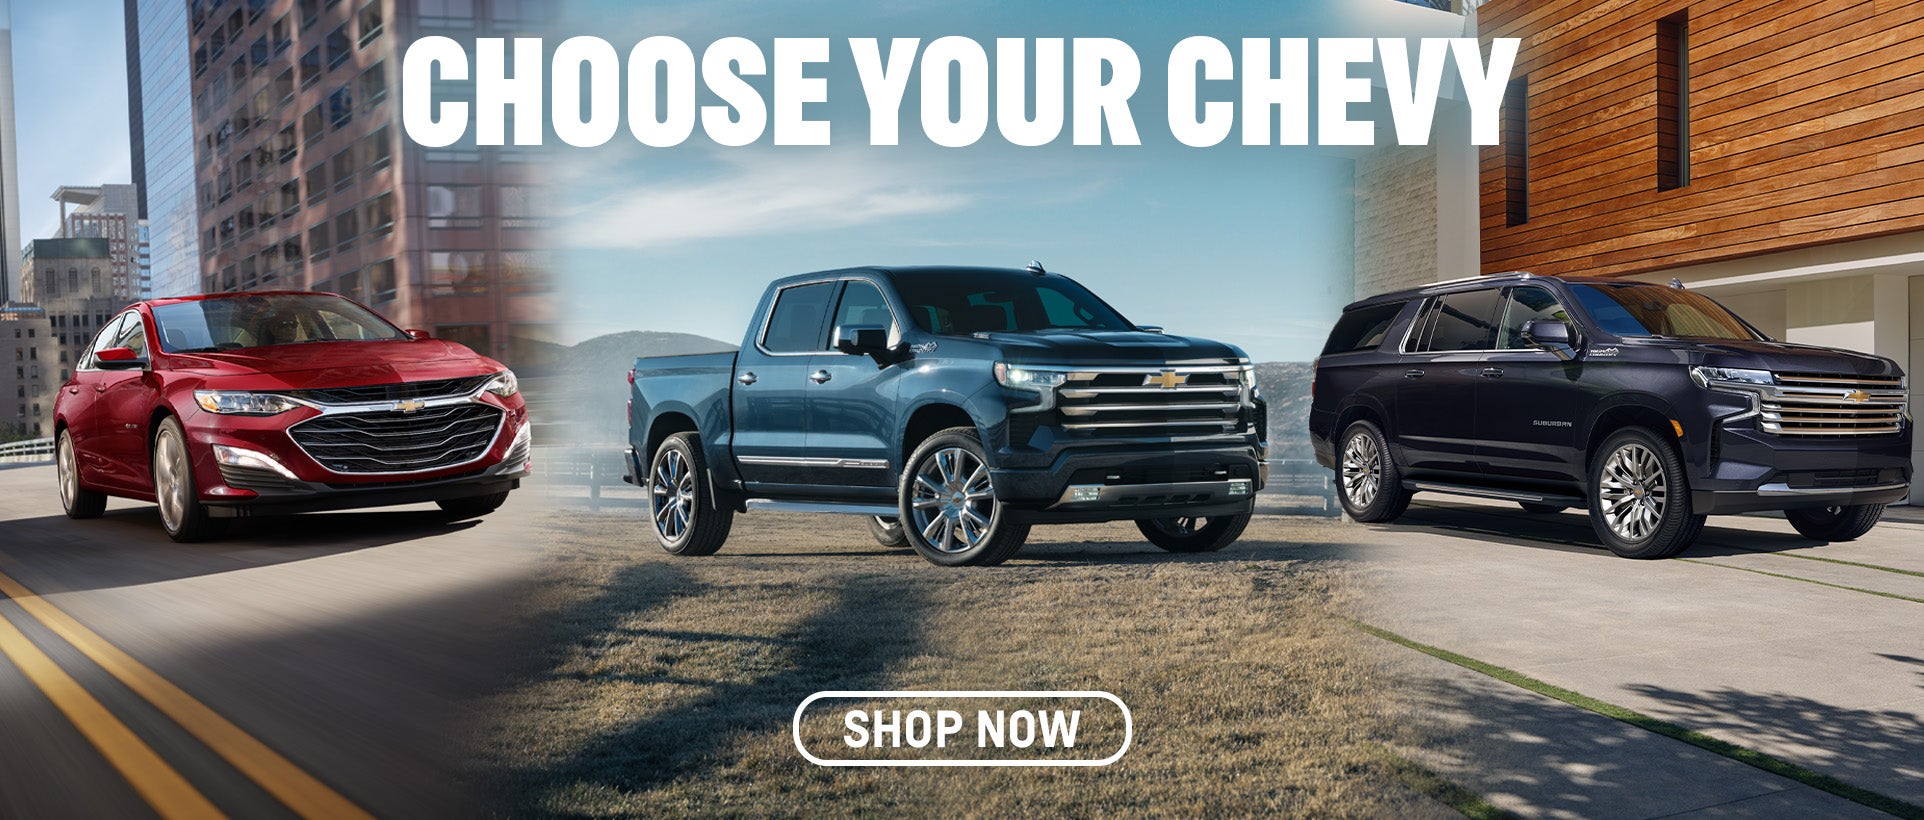 New Chevrolet Models For Sale